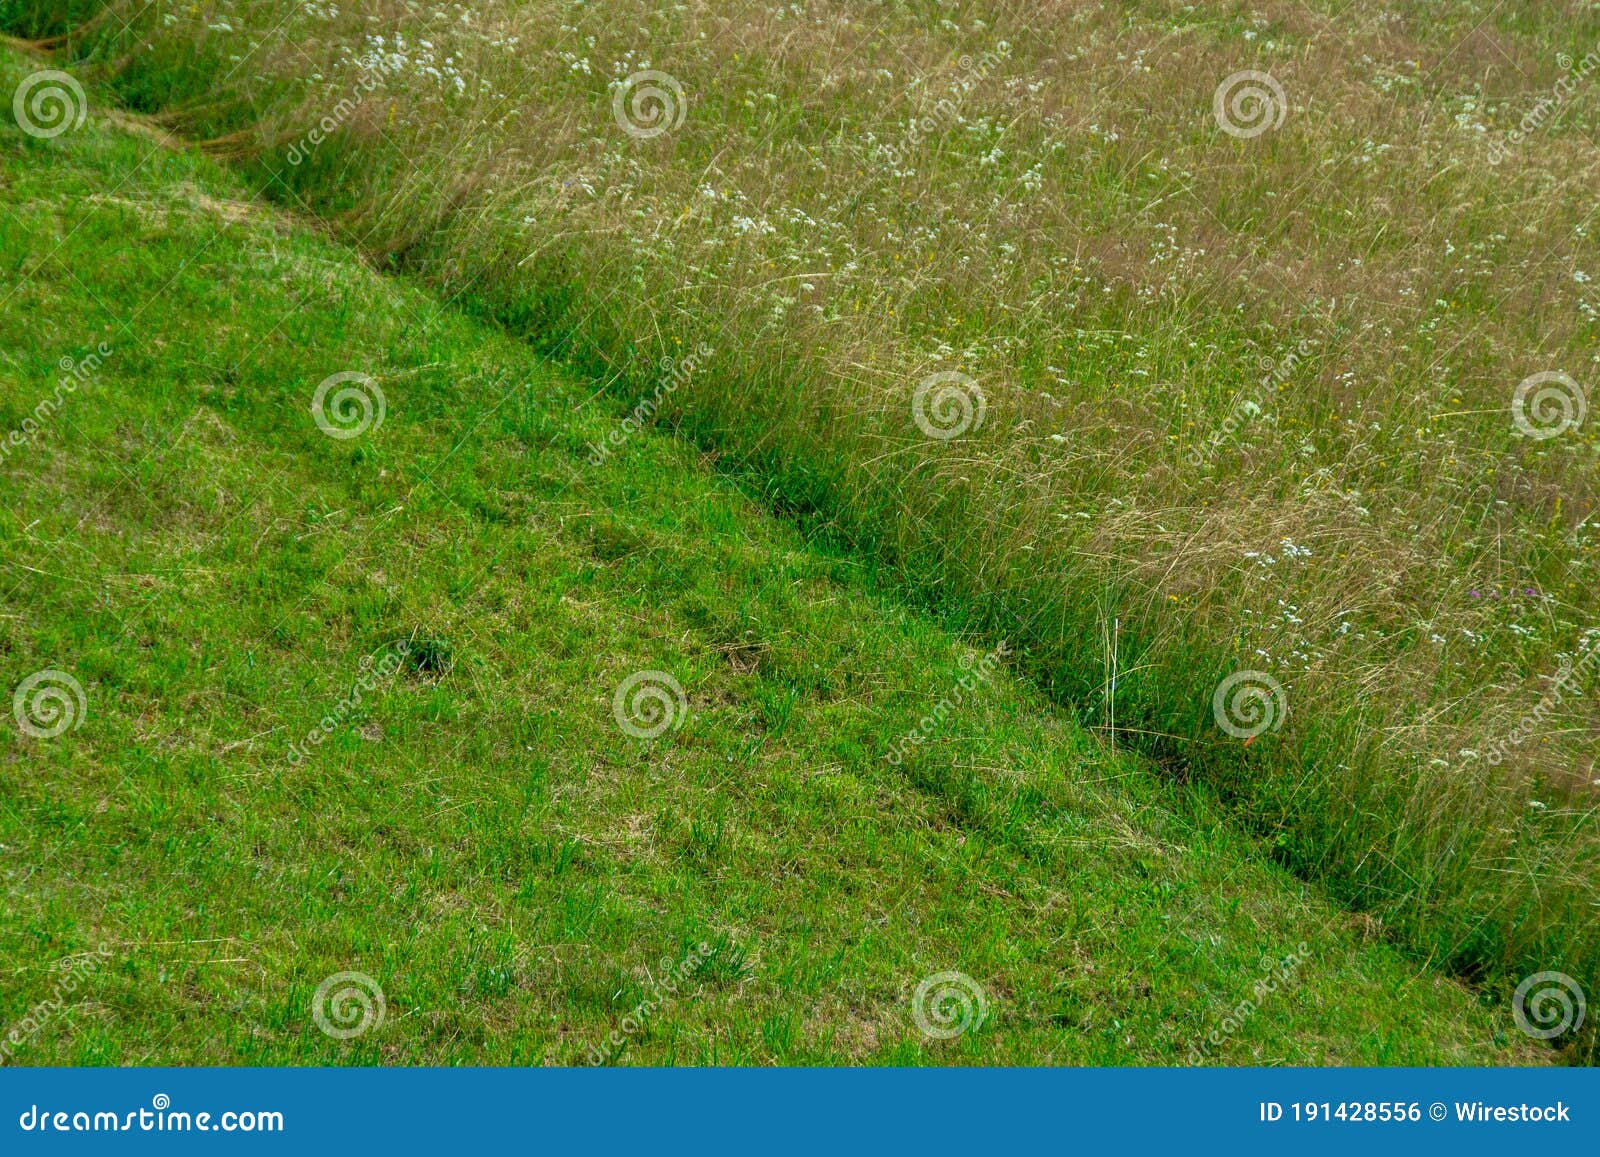 Closeup Of Mowed Grass Royalty-Free Stock Photo | CartoonDealer.com